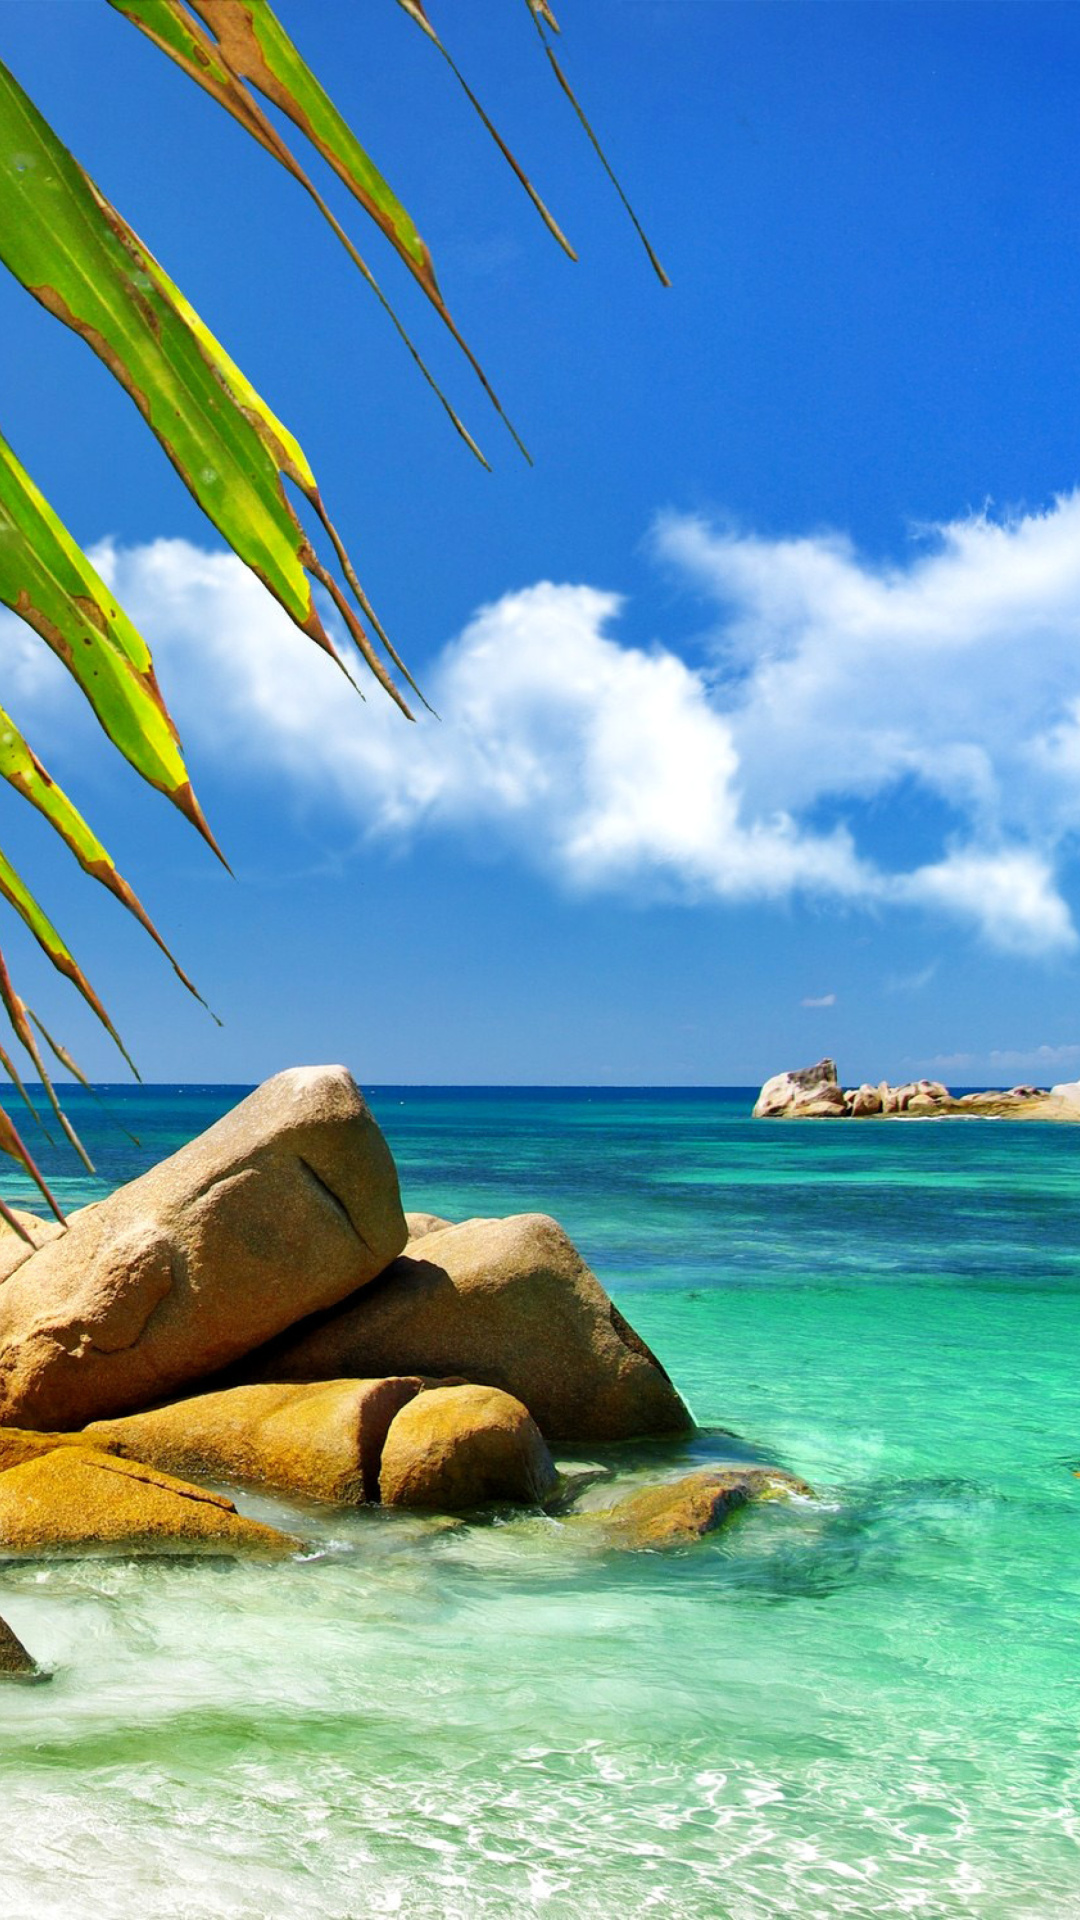 Aruba Luxury Hotel and Beach wallpaper 1080x1920